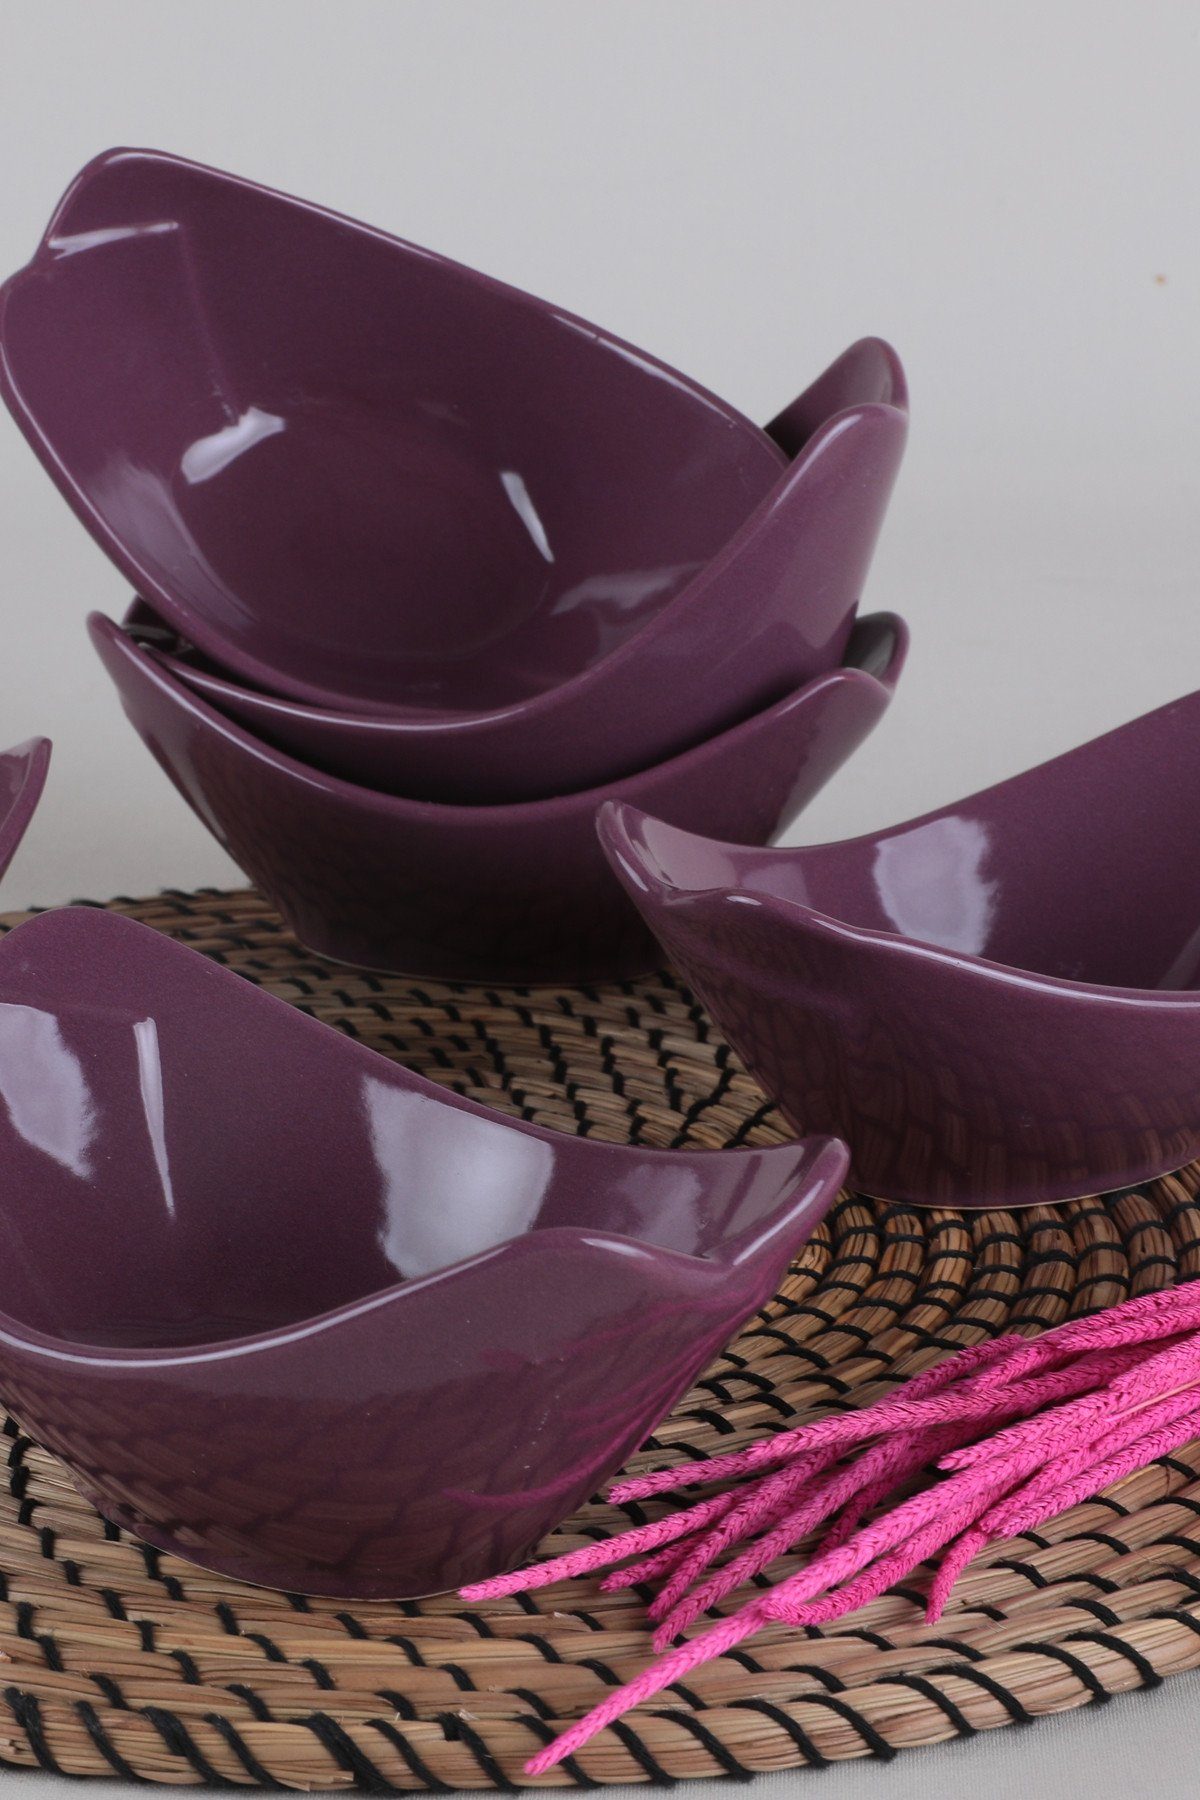 Hermia Concept Schüssel KRM1256, 100% Schüsseln, Keramik Violett